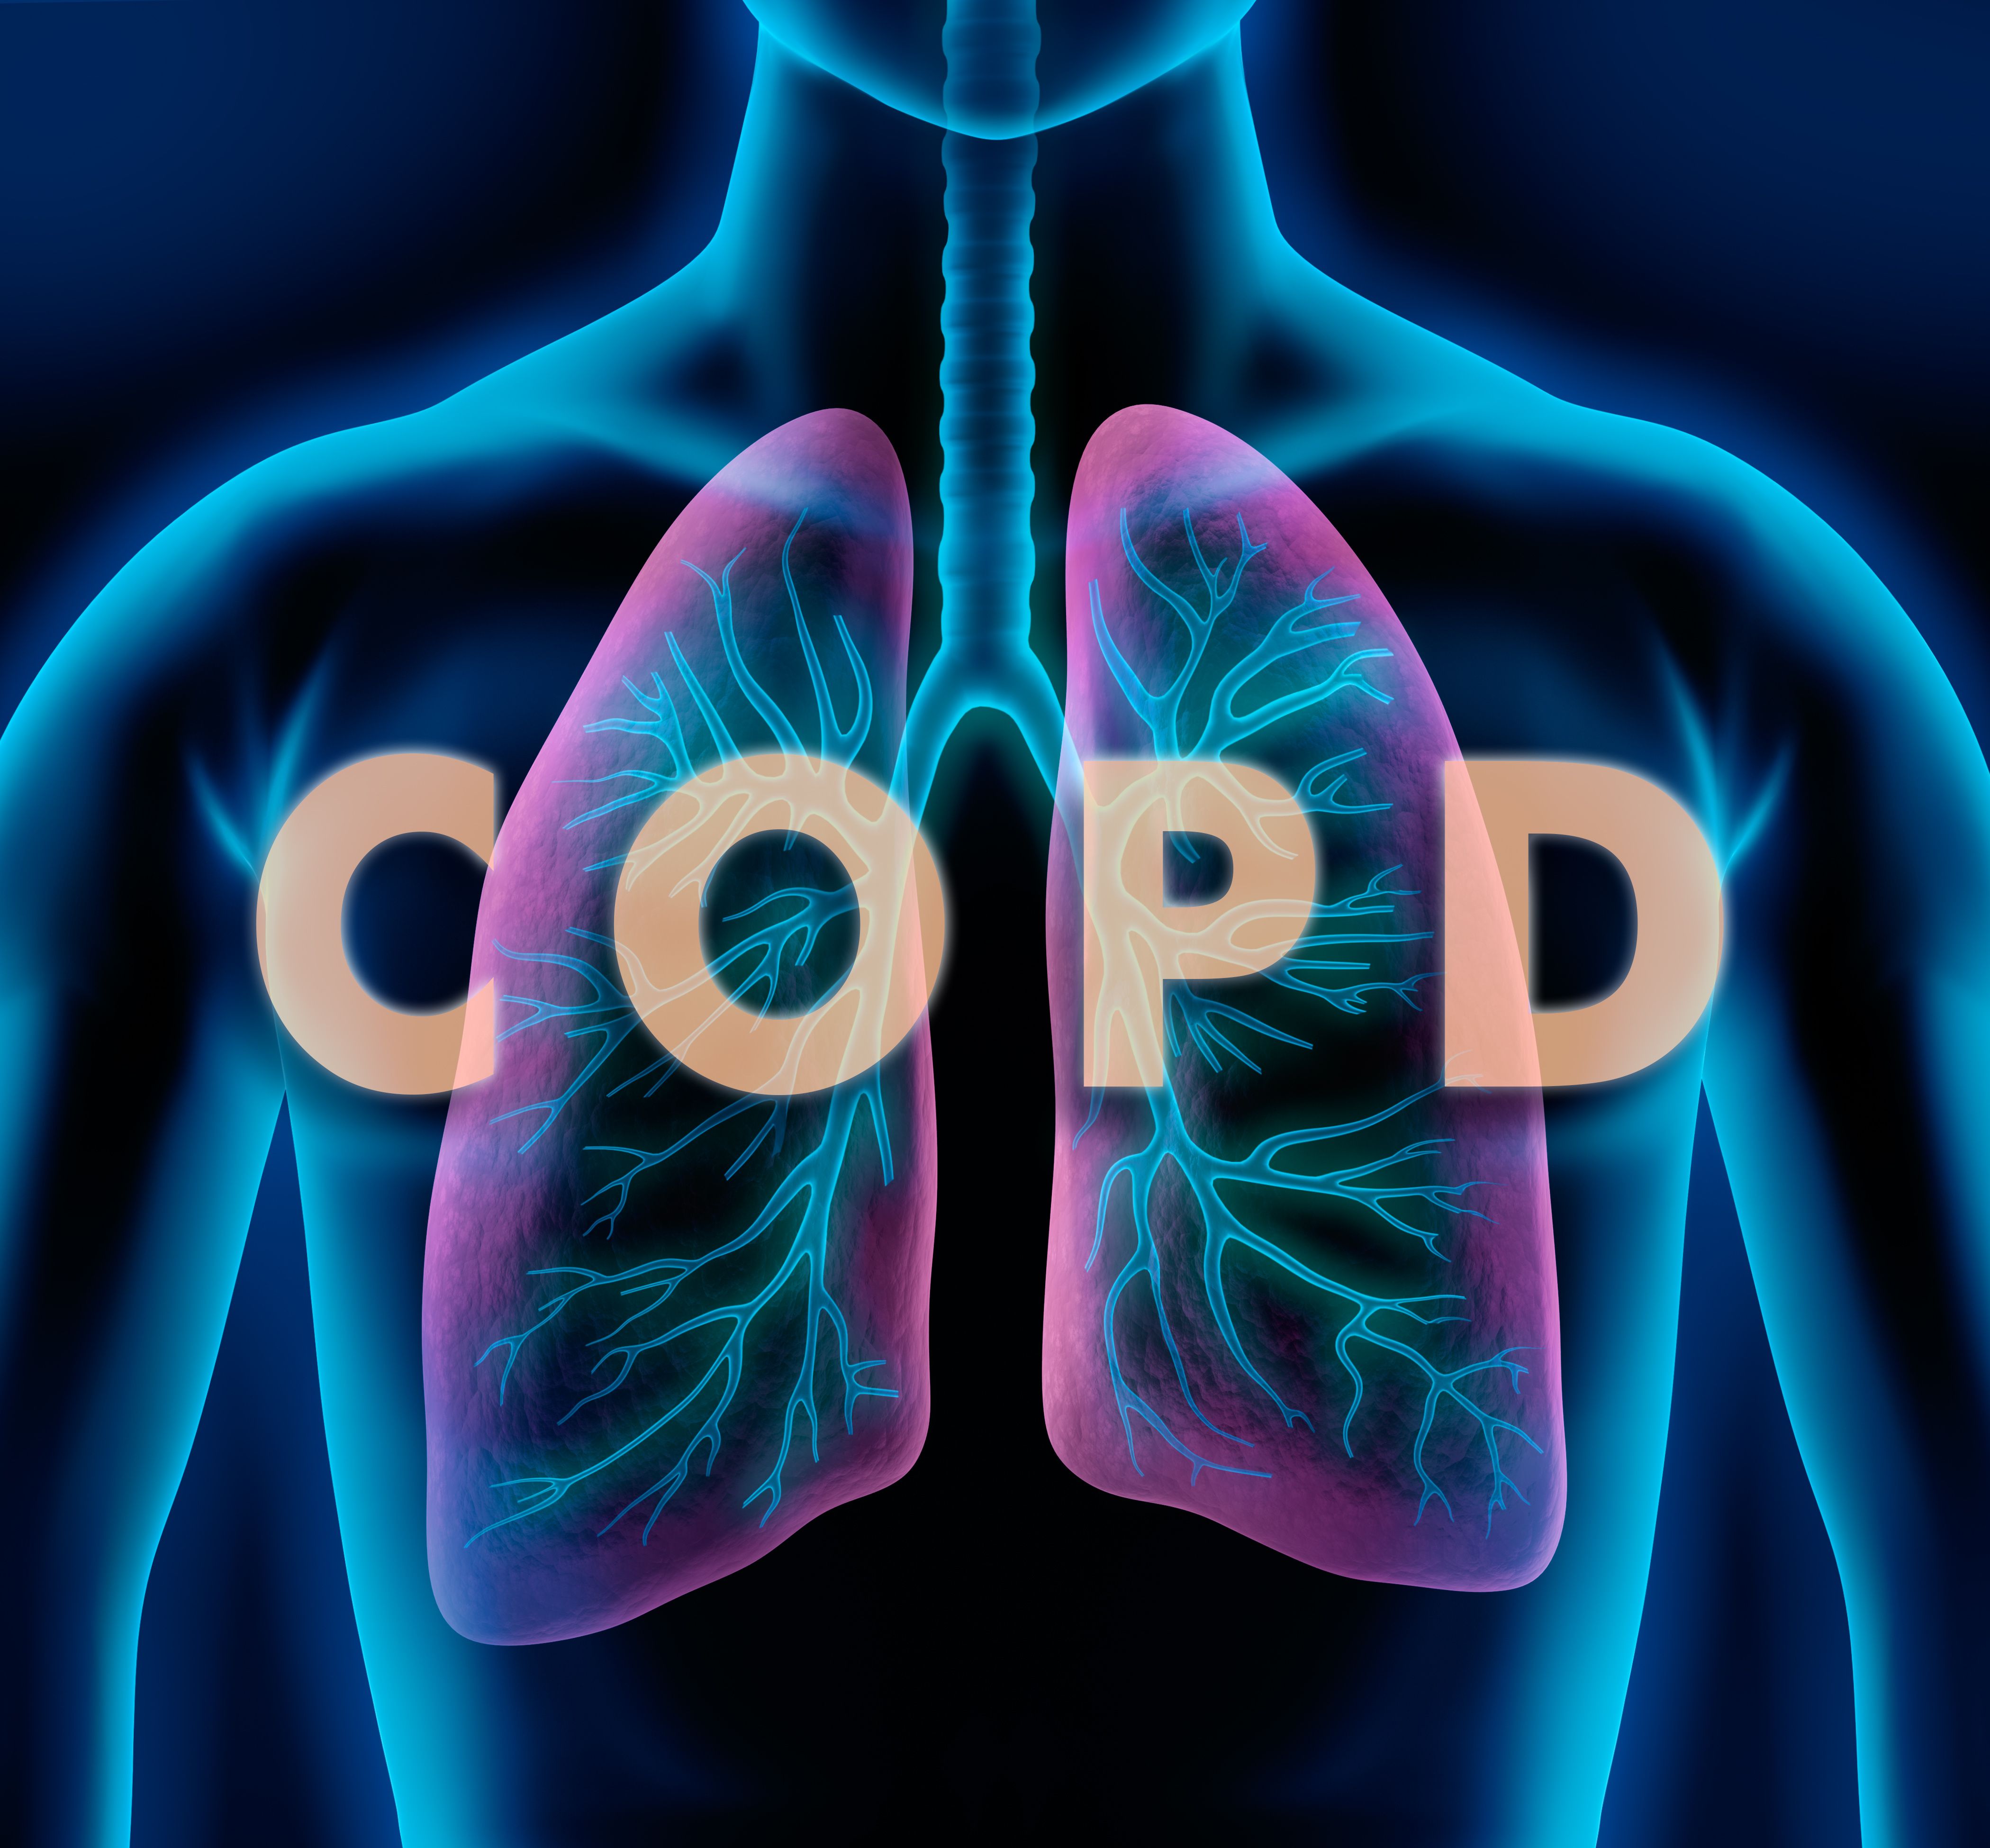 COPD cartoon | Image credit: peterschreiber.media - stock.adobe.com